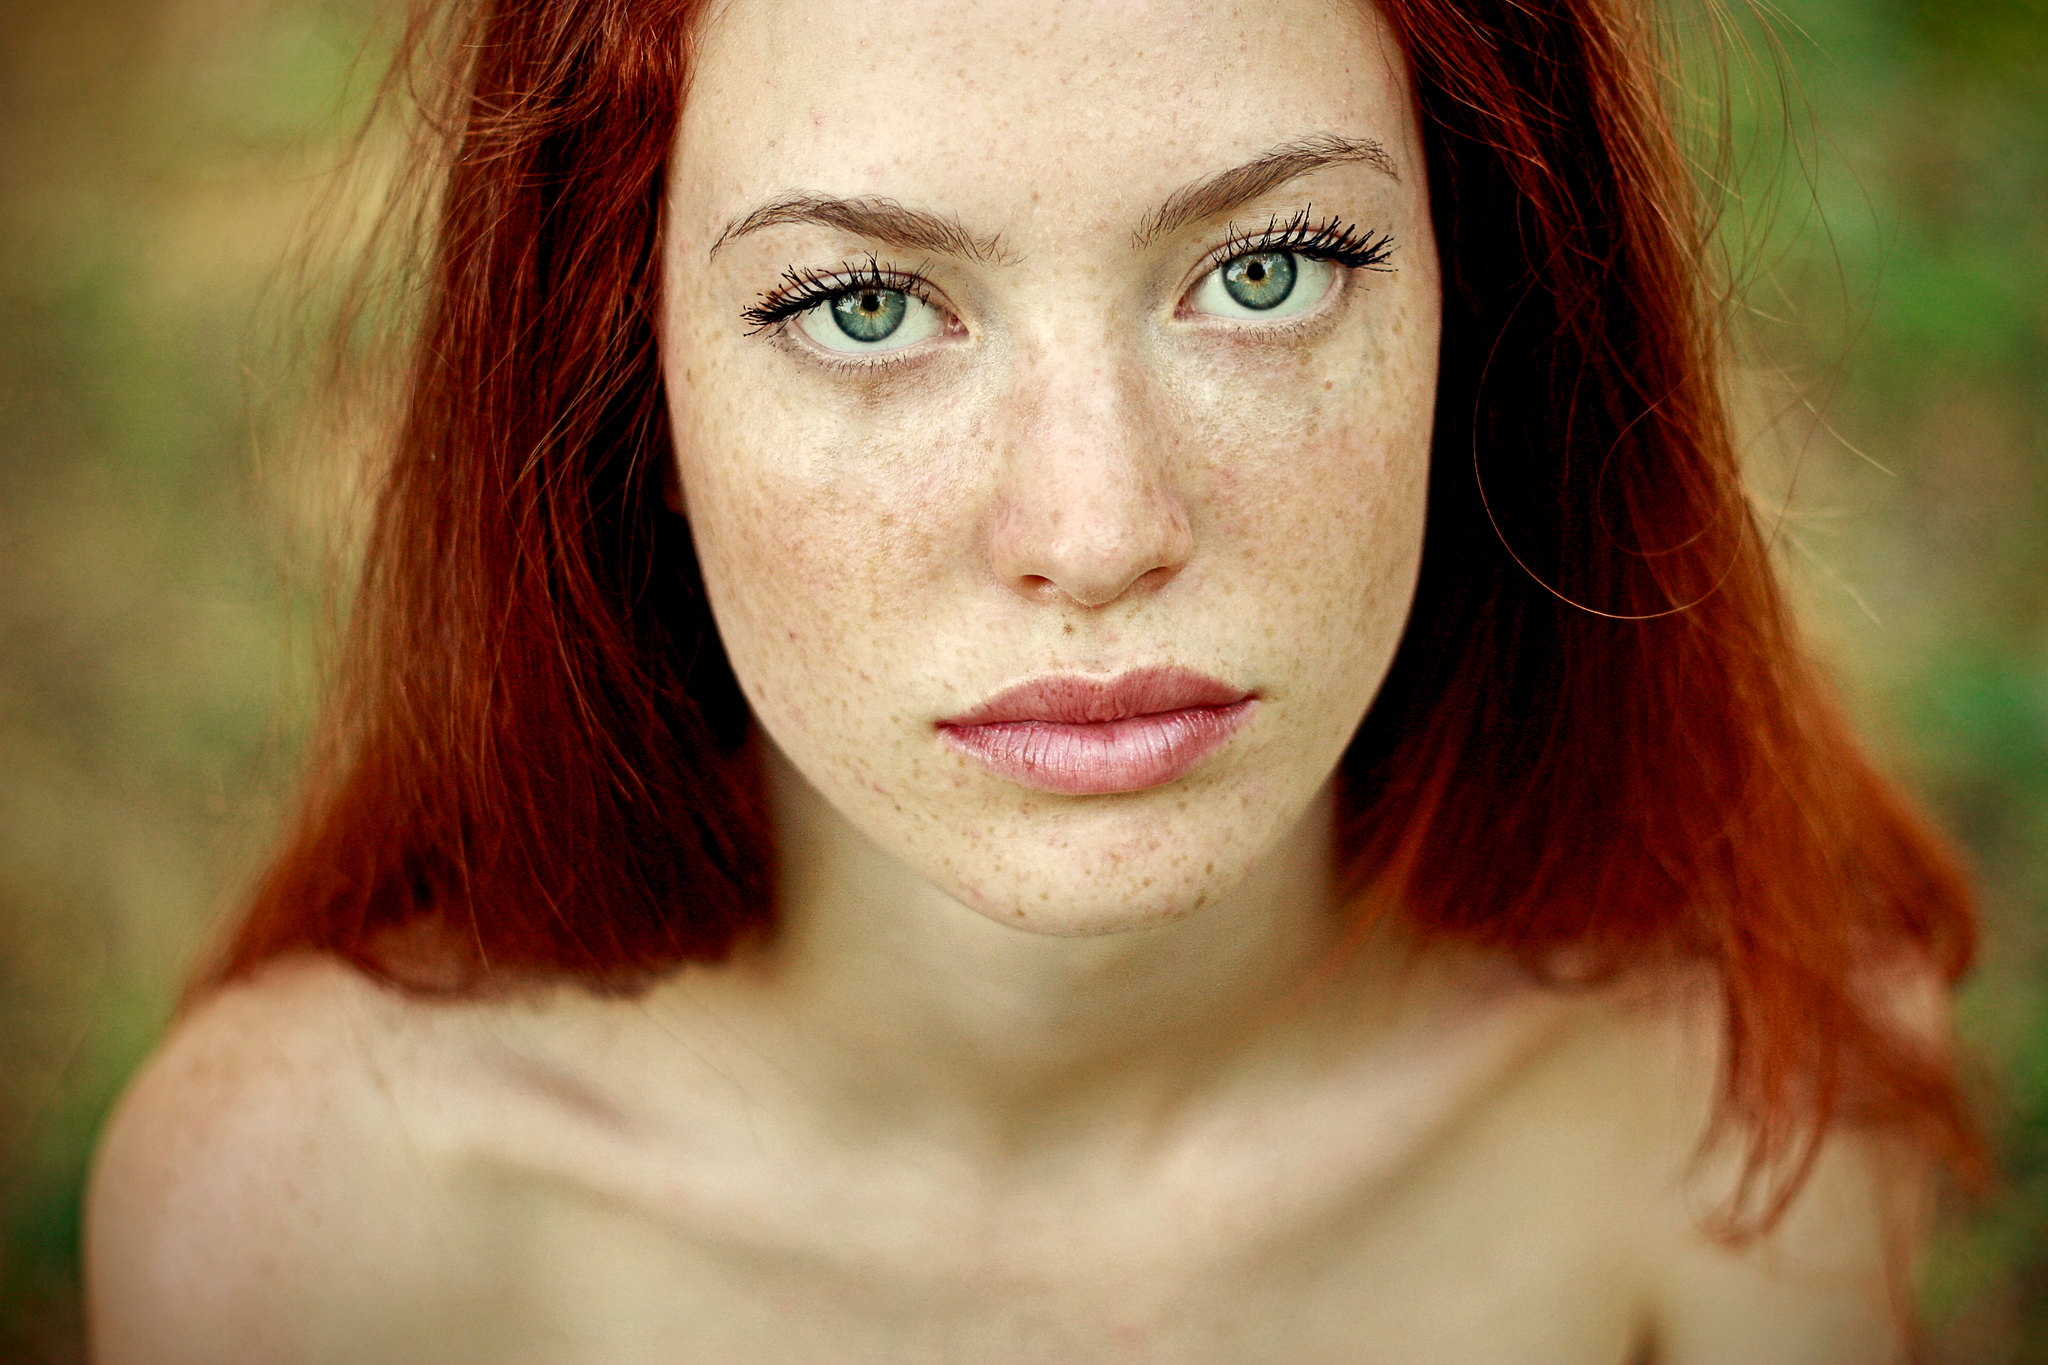 Women Model Redhead Bare Shoulders Blue Eyes Looking At Viewer Women Outdoors Closeup